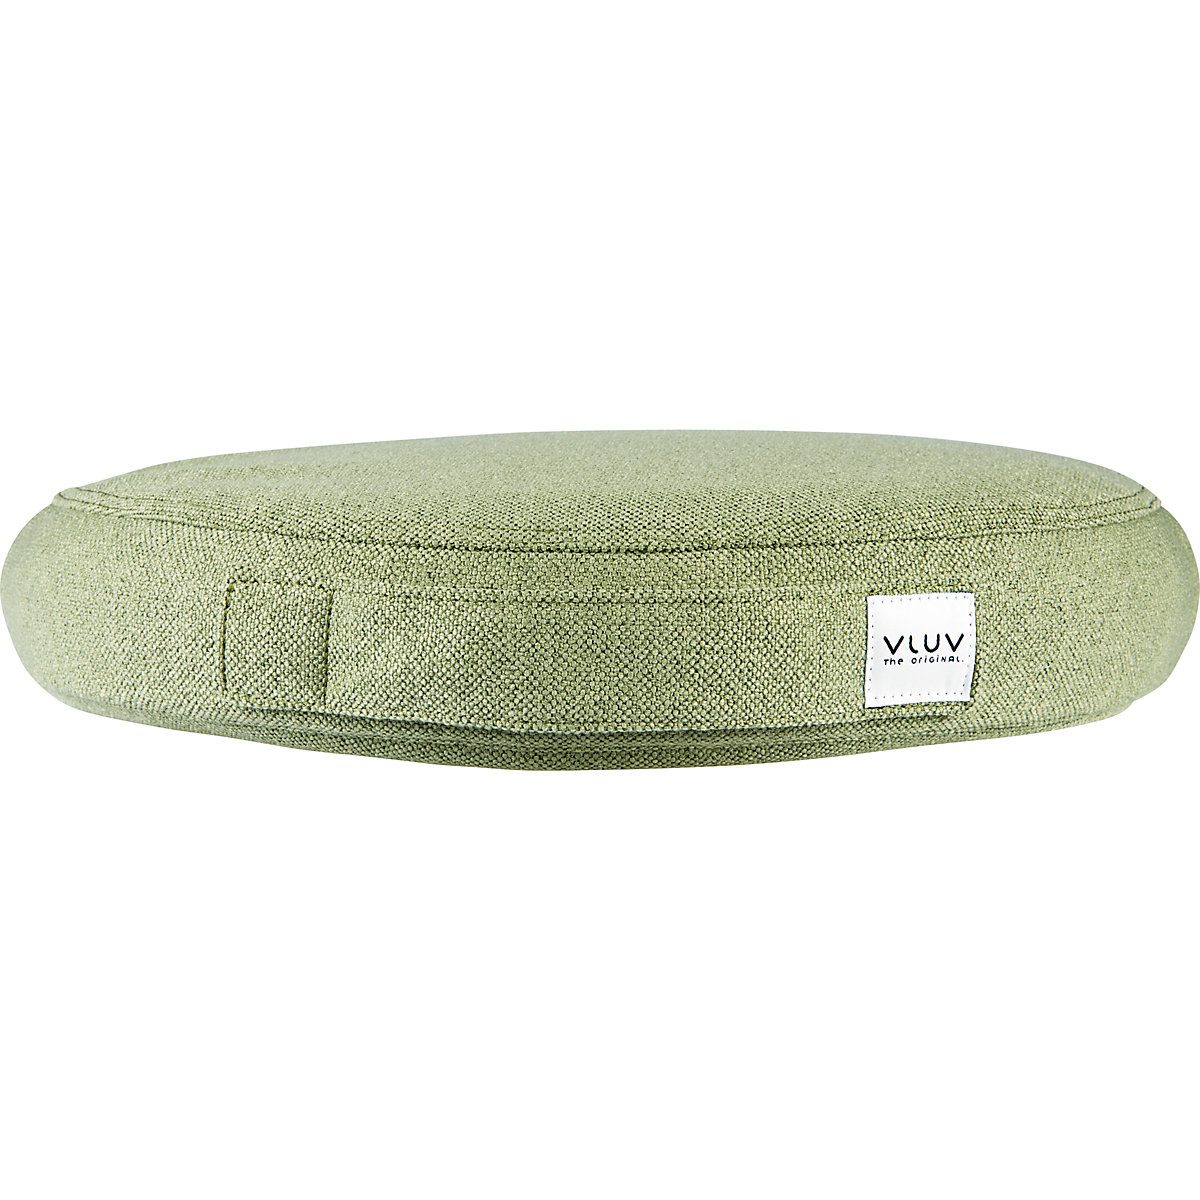 Jastuk za ravnotežu PIL&PED SOVA – VLUV (Prikaz proizvoda 2)-1